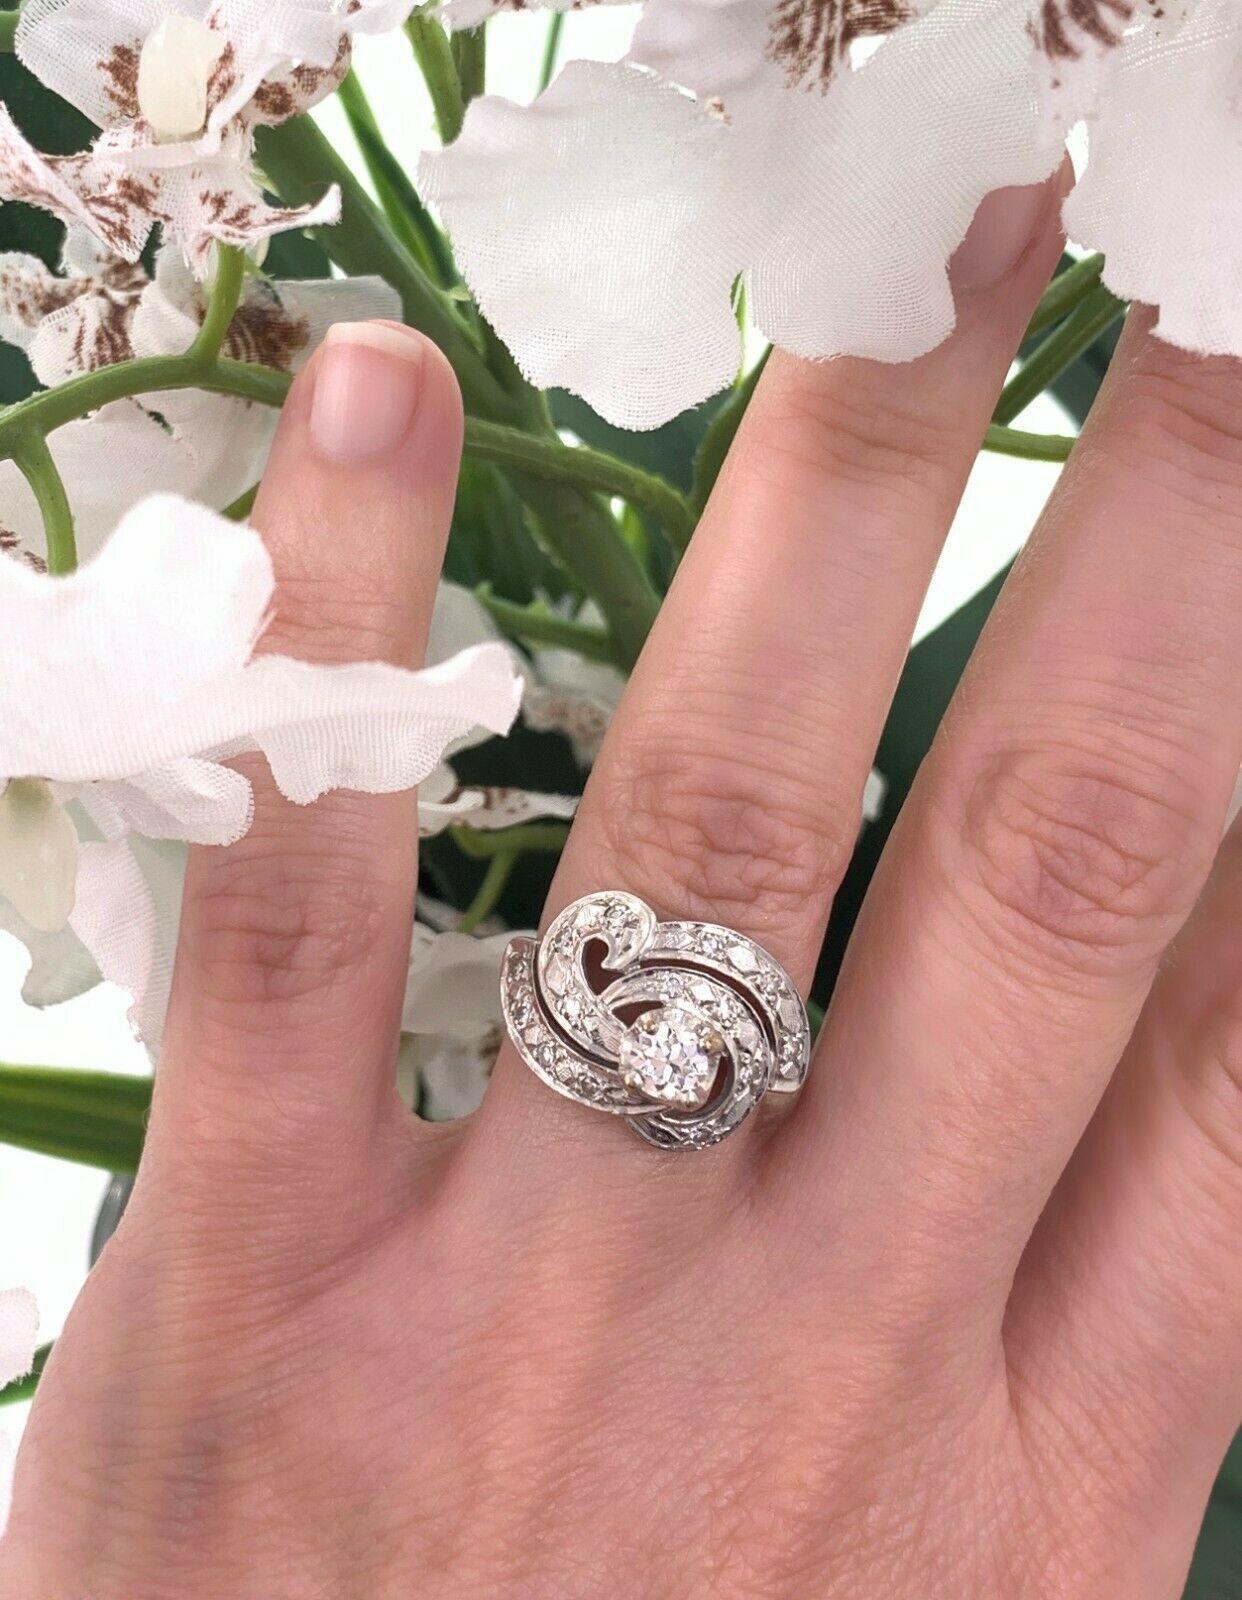 Antique Diamond Ring
Style:  Art Deco Swirl Ring
Metal: 14K White Gold
Size / Measurements:  6, sizable
TCW: 0.65 carats total approximate
Main Diamond: 0.33 Carat Old European Cut 
Accent Diamonds:  12 Single Cut Diamonds
Color & Clarity: H - I